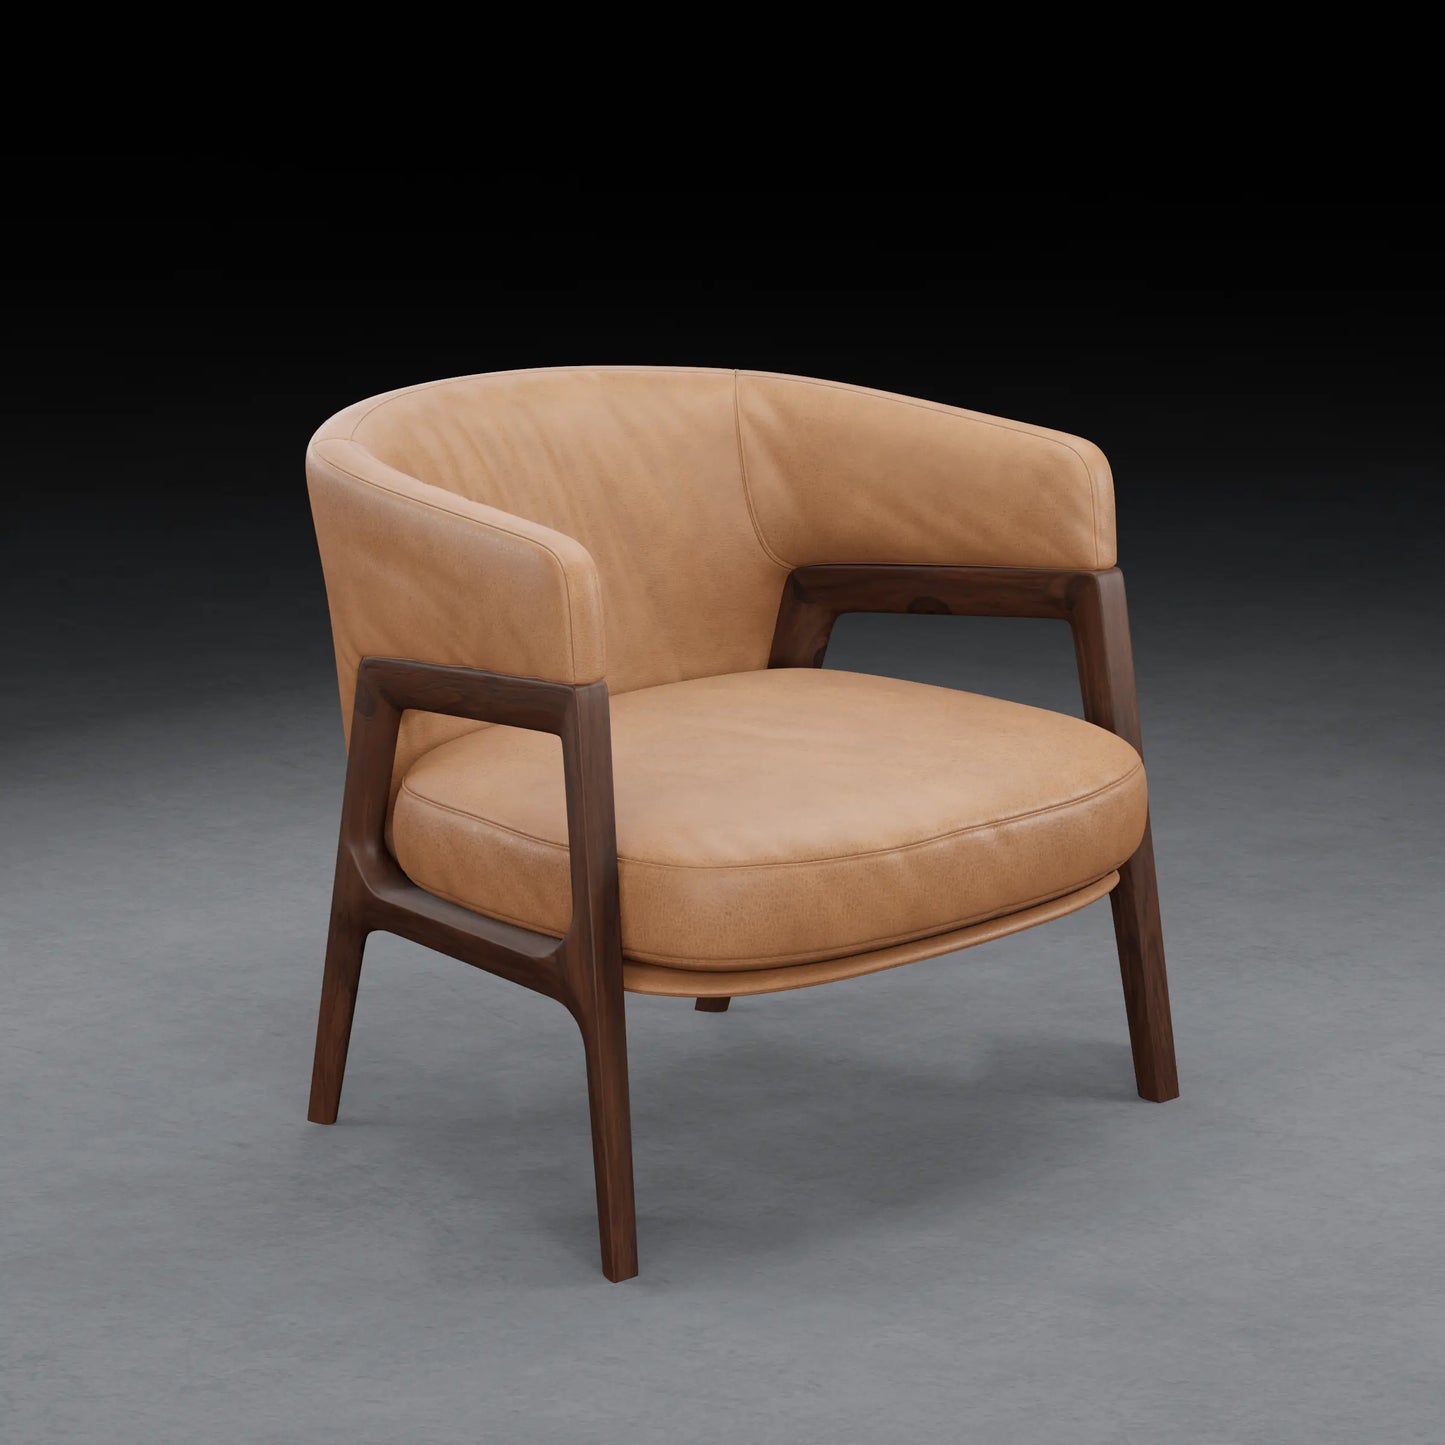 LEMON - Armchair in Teak wood - Leather Finish | Dark Beige Color